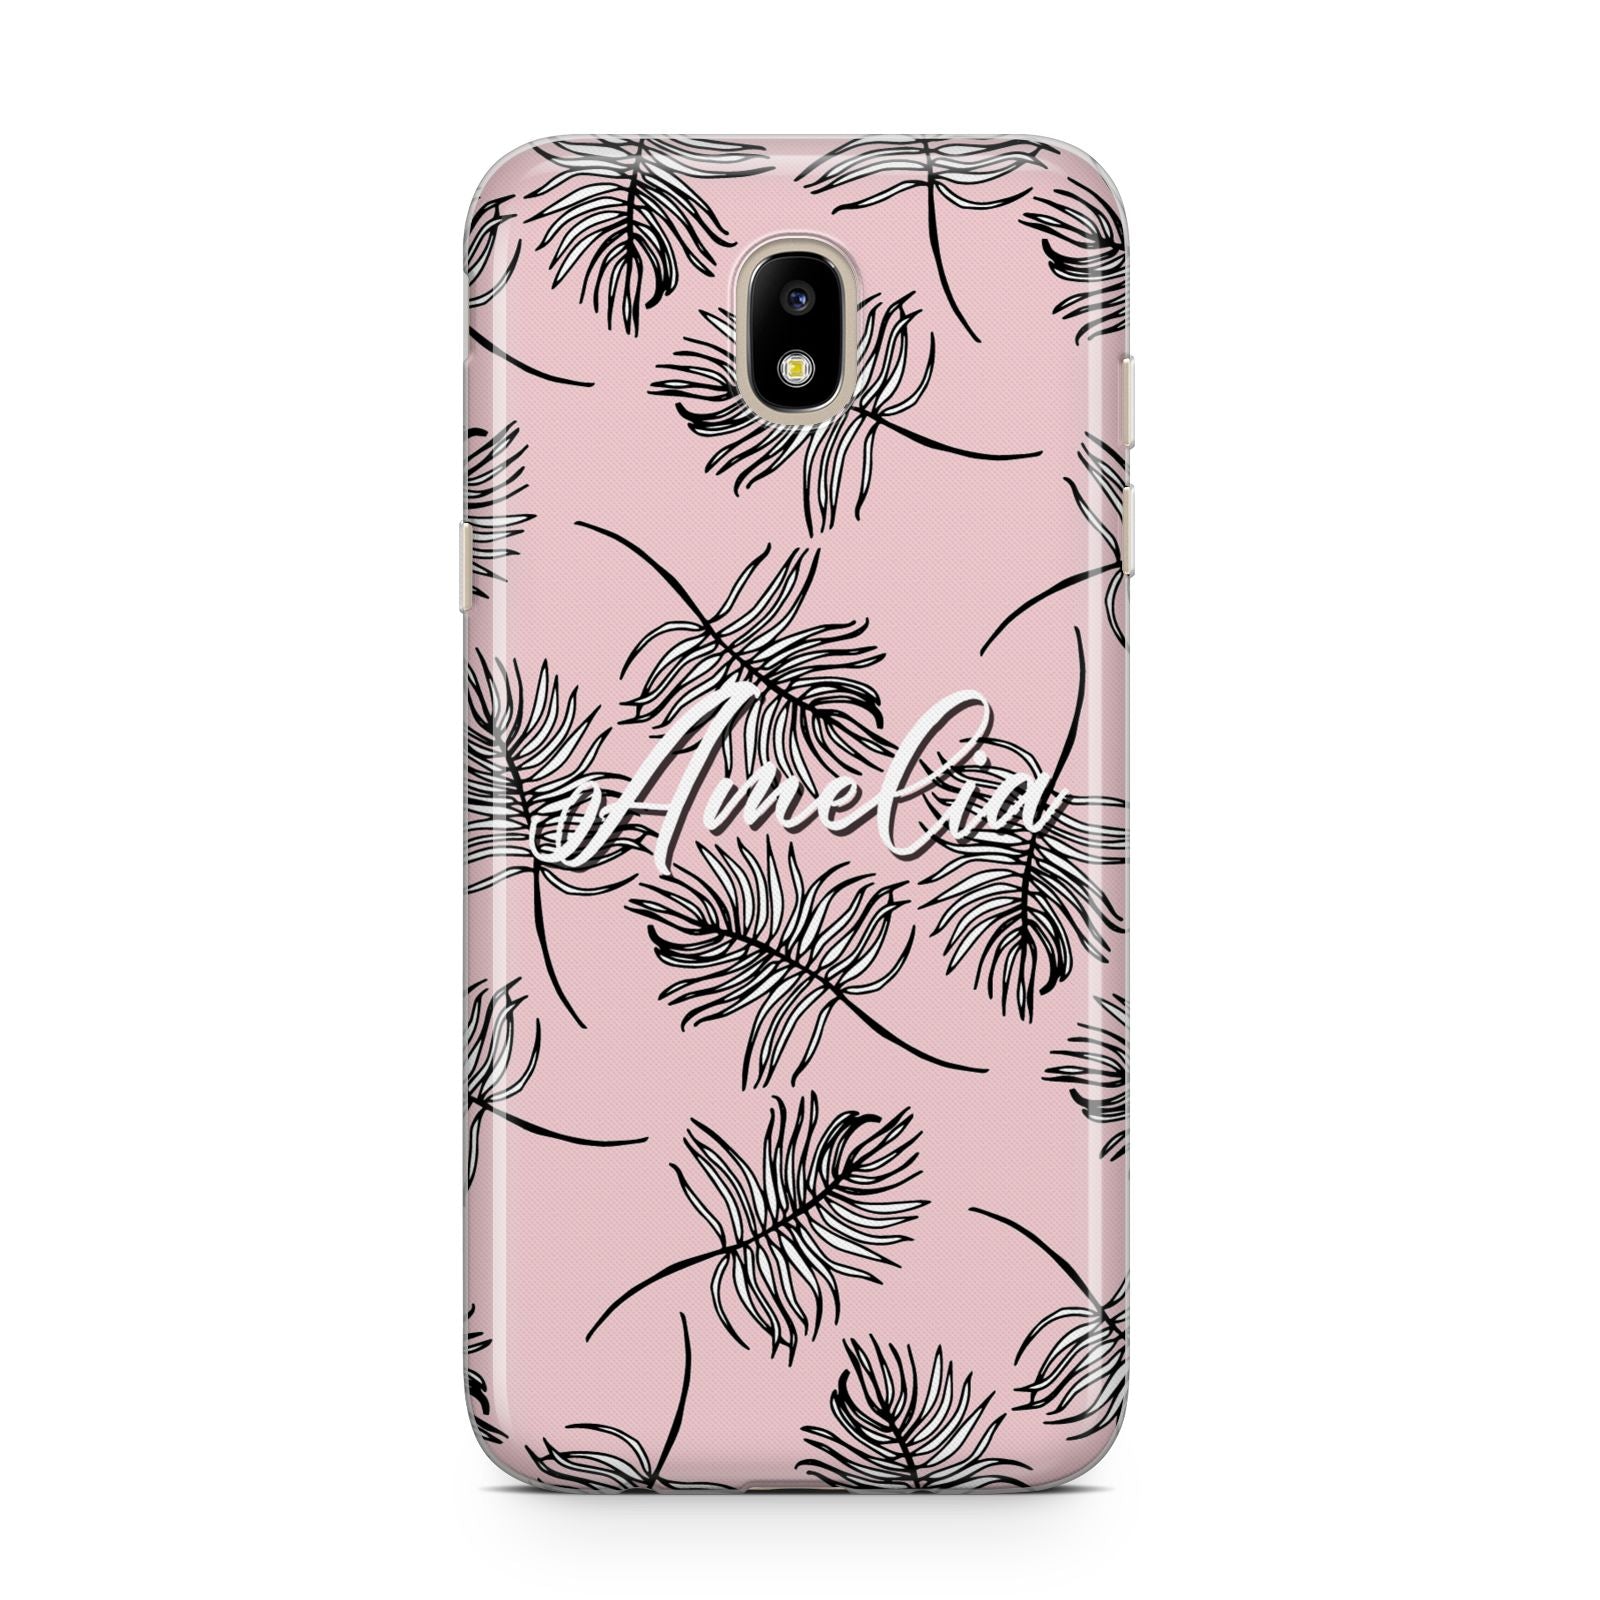 Personalised Pink Monochrome Tropical Leaf Samsung J5 2017 Case